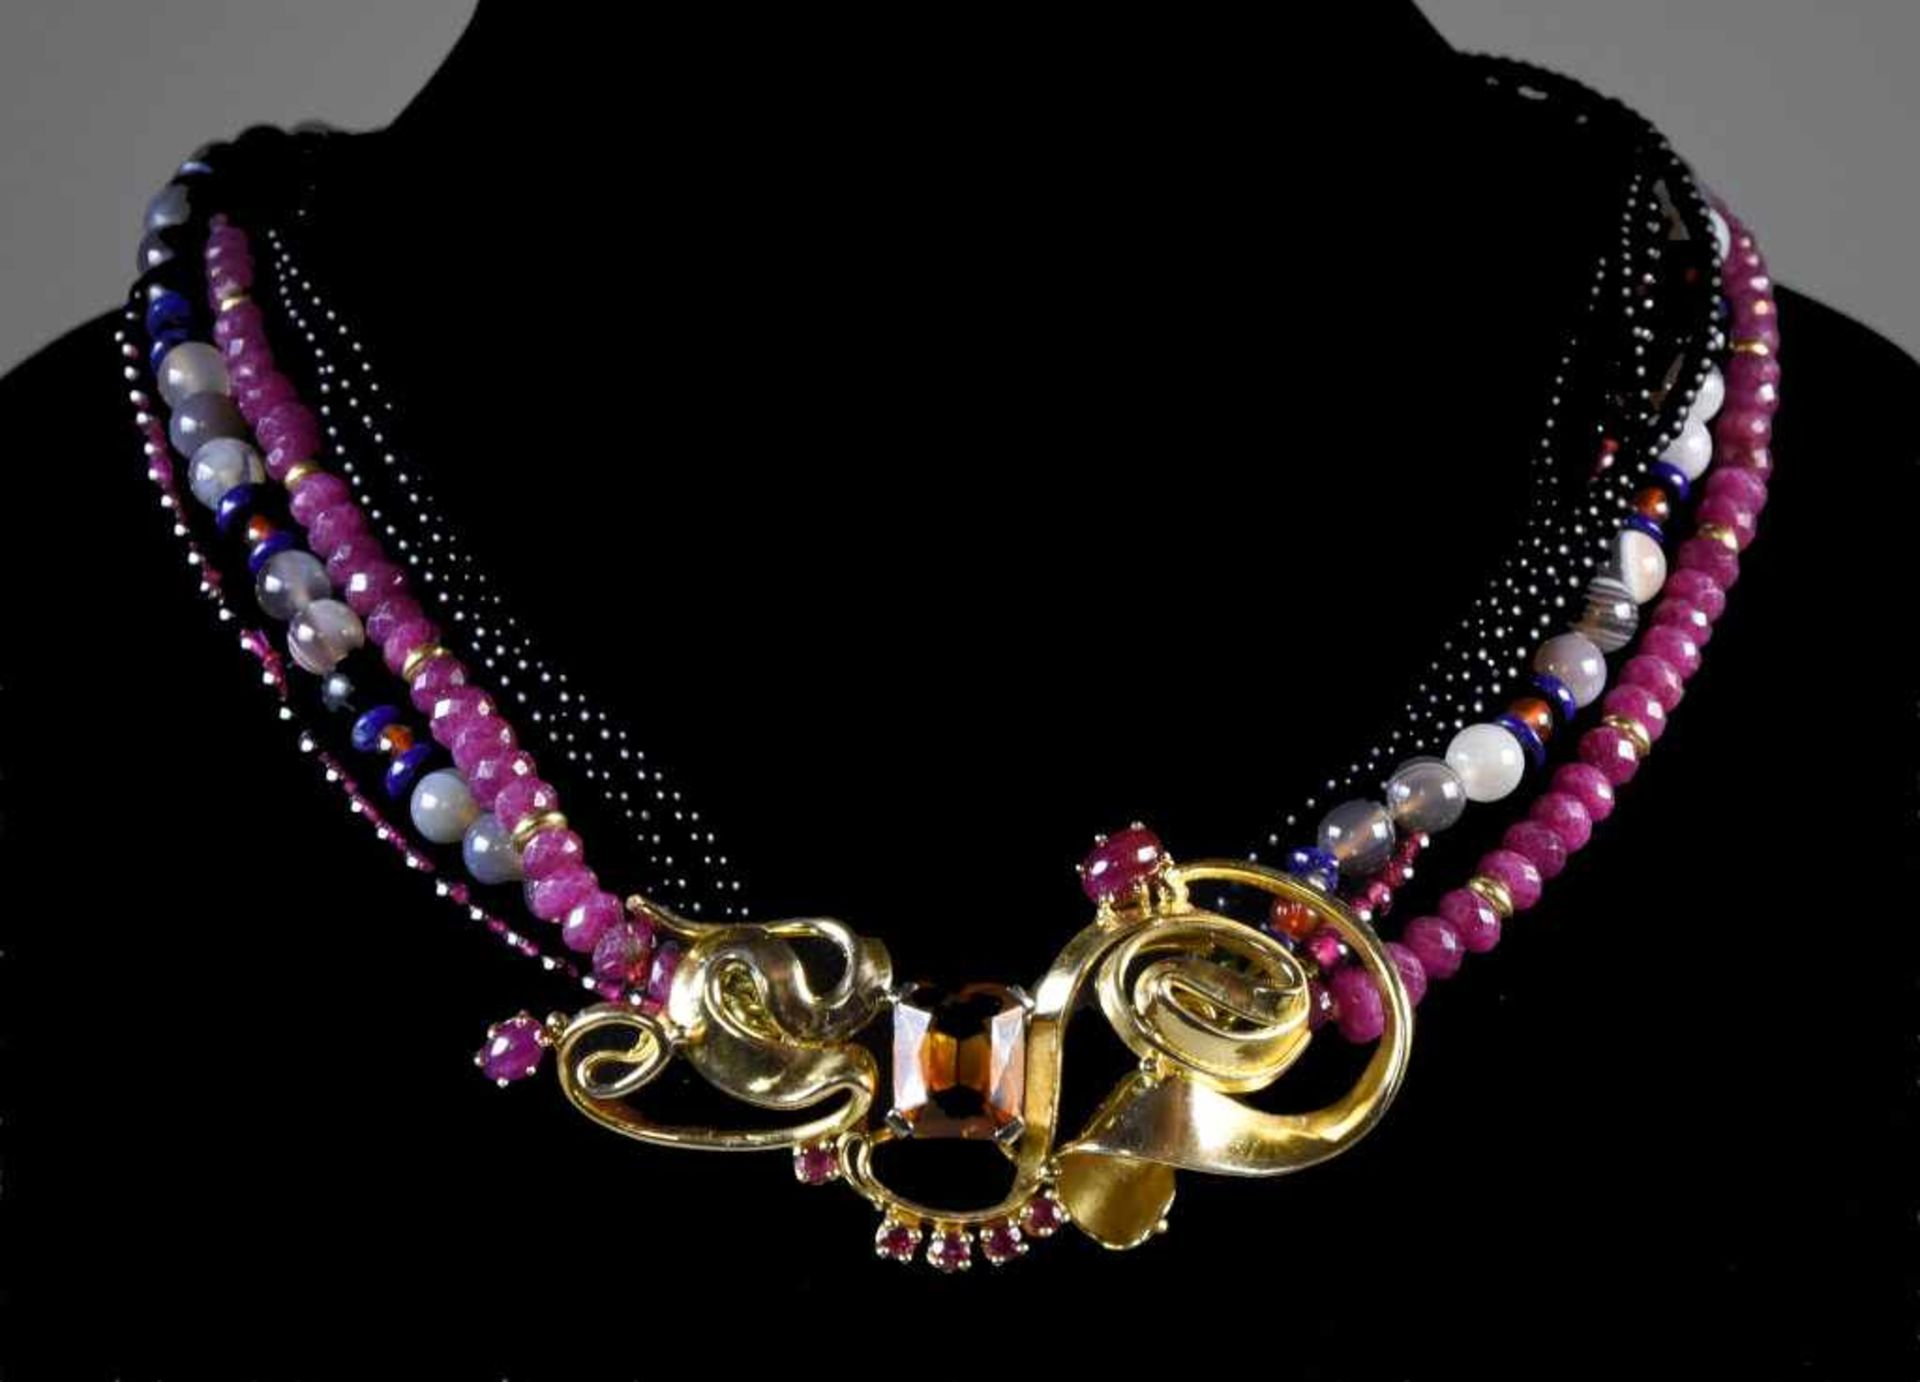 Jacques Michel - Necklace - ruby, garnet, agate and glod pearls Composé de 6 rangs de perles semi-